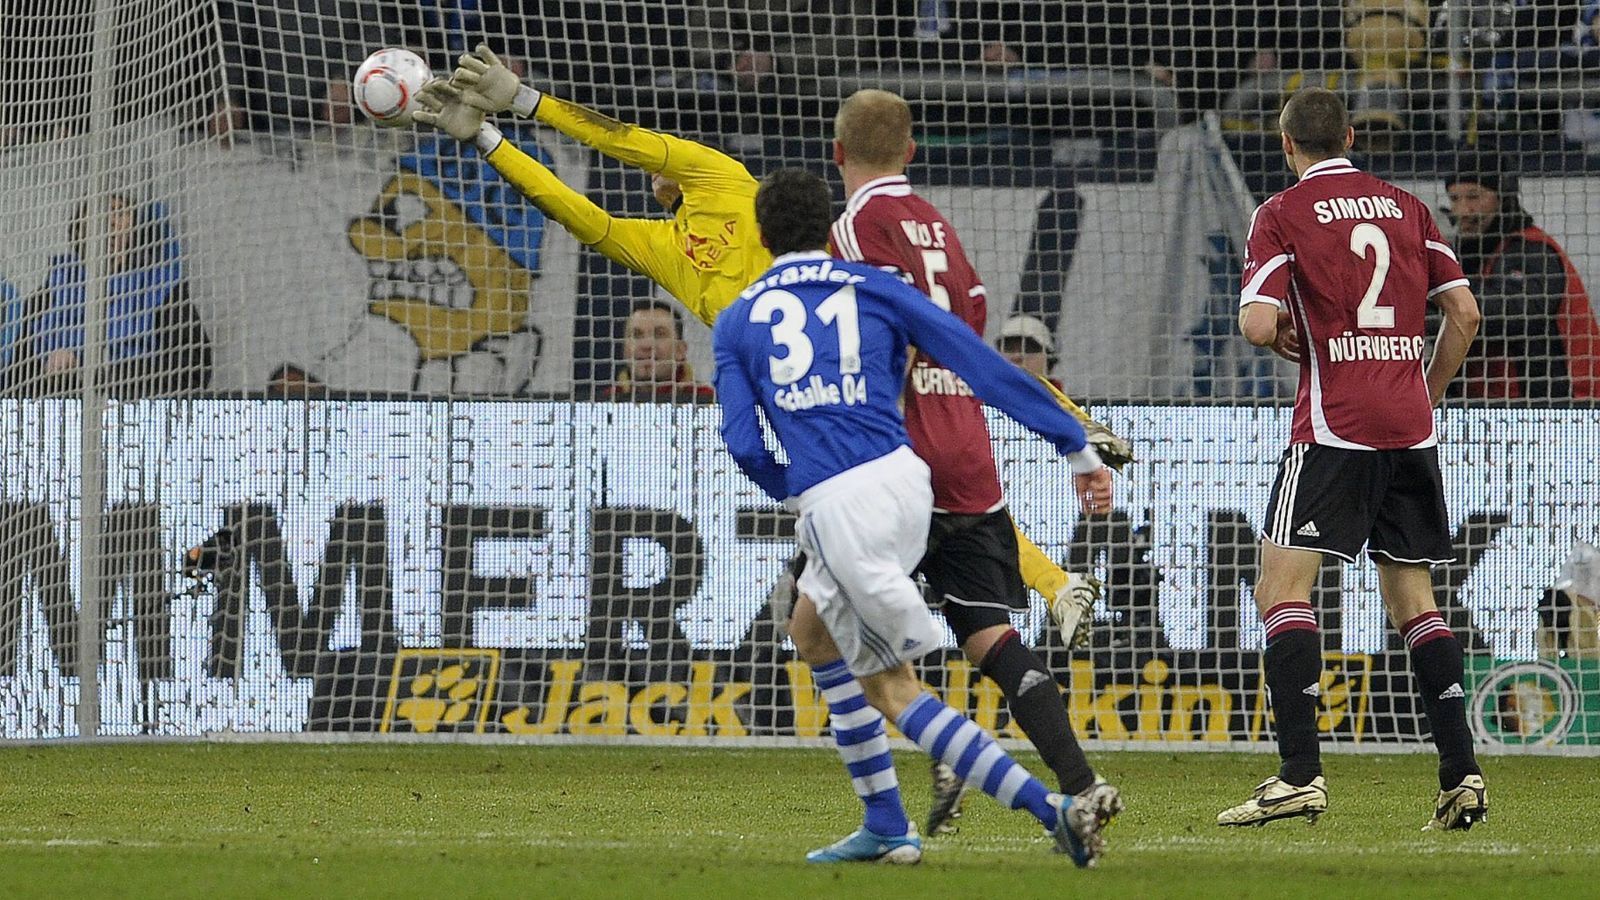 
                <strong>Platz 2 - Julian Draxler (FC Schalke 04)</strong><br>
                Alter zum Zeitpunkt des Tores: 17 Jahre, 4 Monate, 5 TageBegegnung: FC Schalke 04 - 1. FC Nürnberg (Ergebnis: 3:2 n.V., 25. Januar 2011)
              